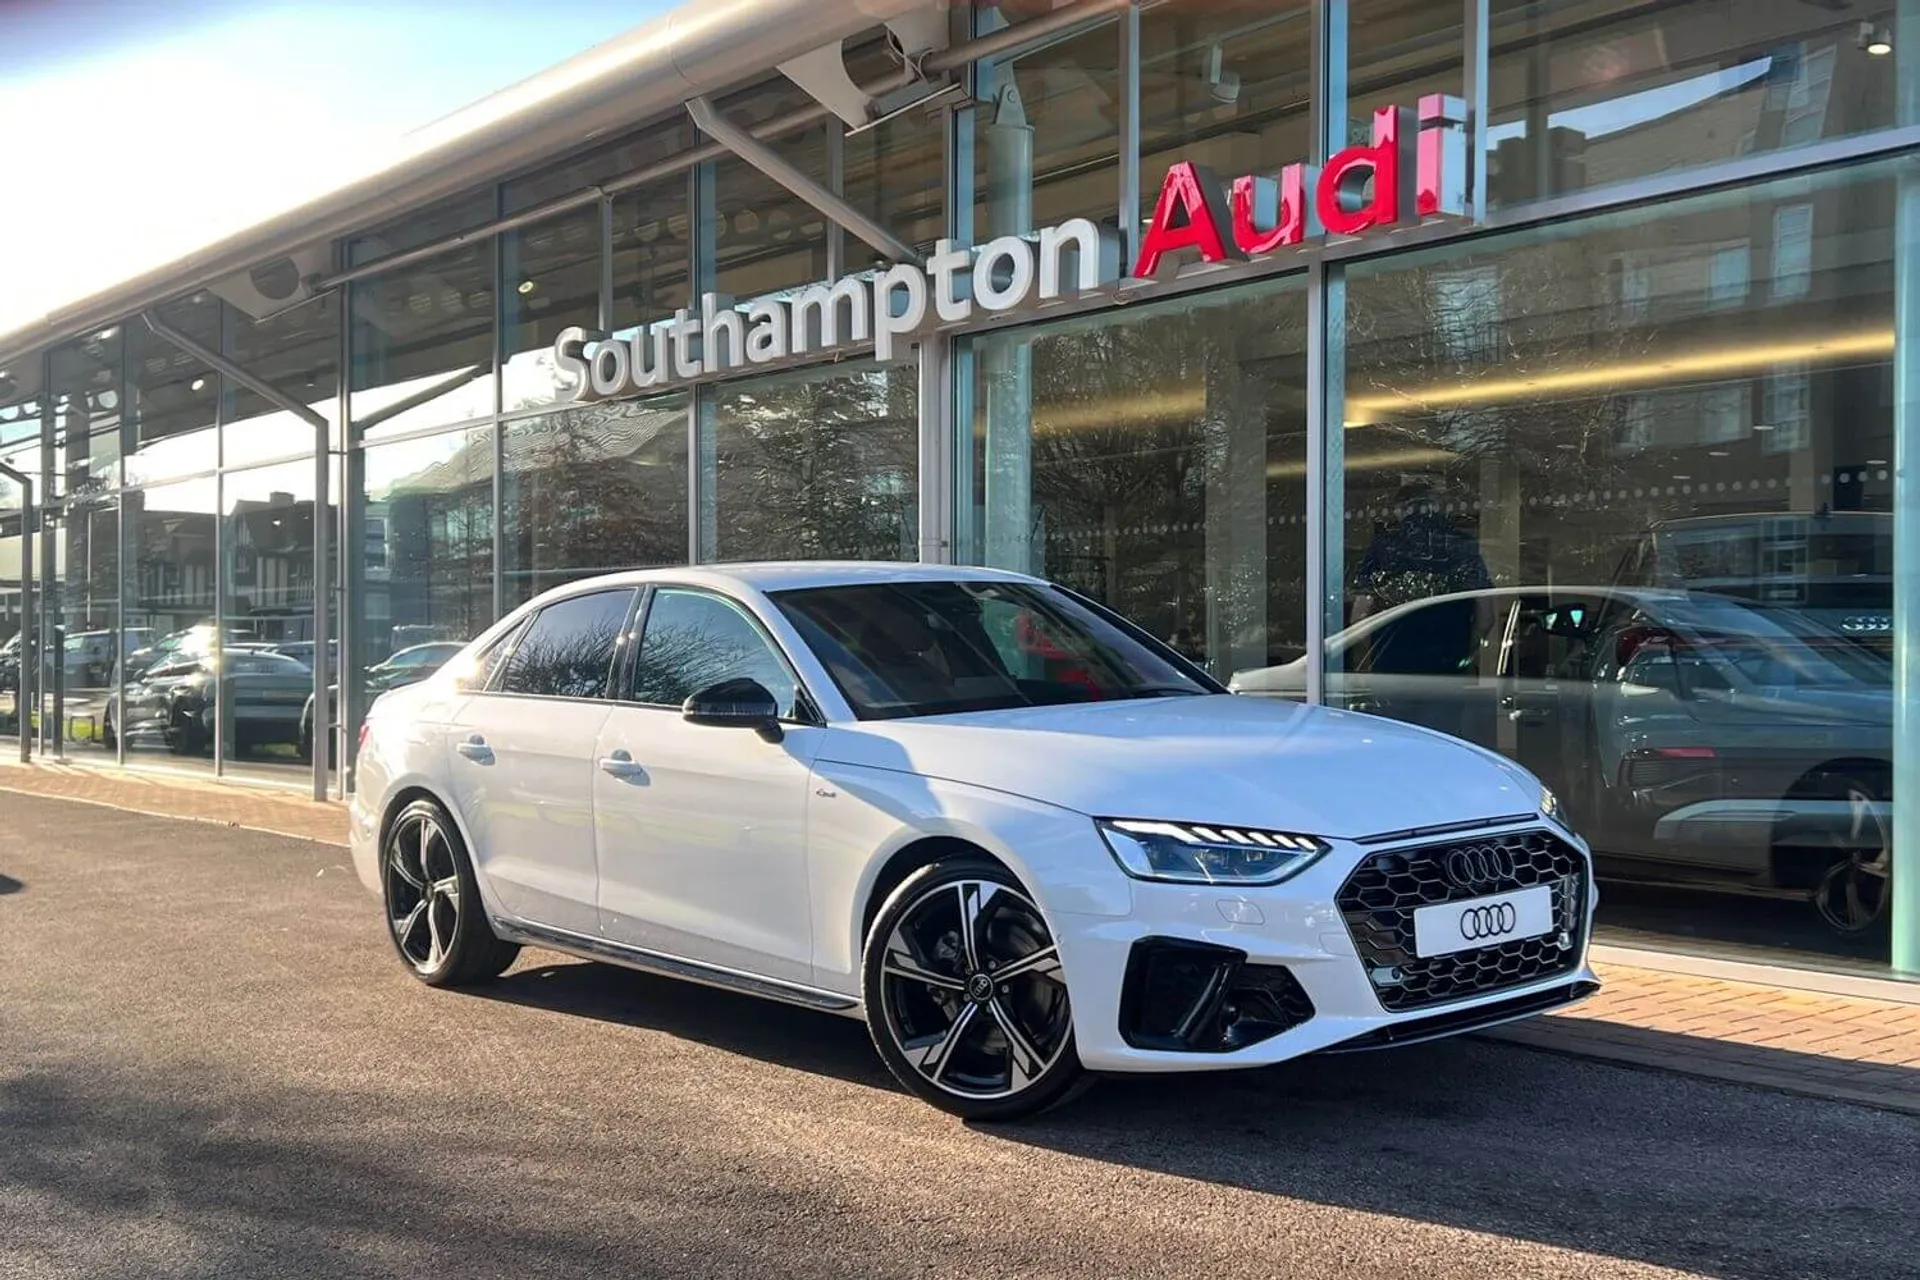 Audi A4 focused image